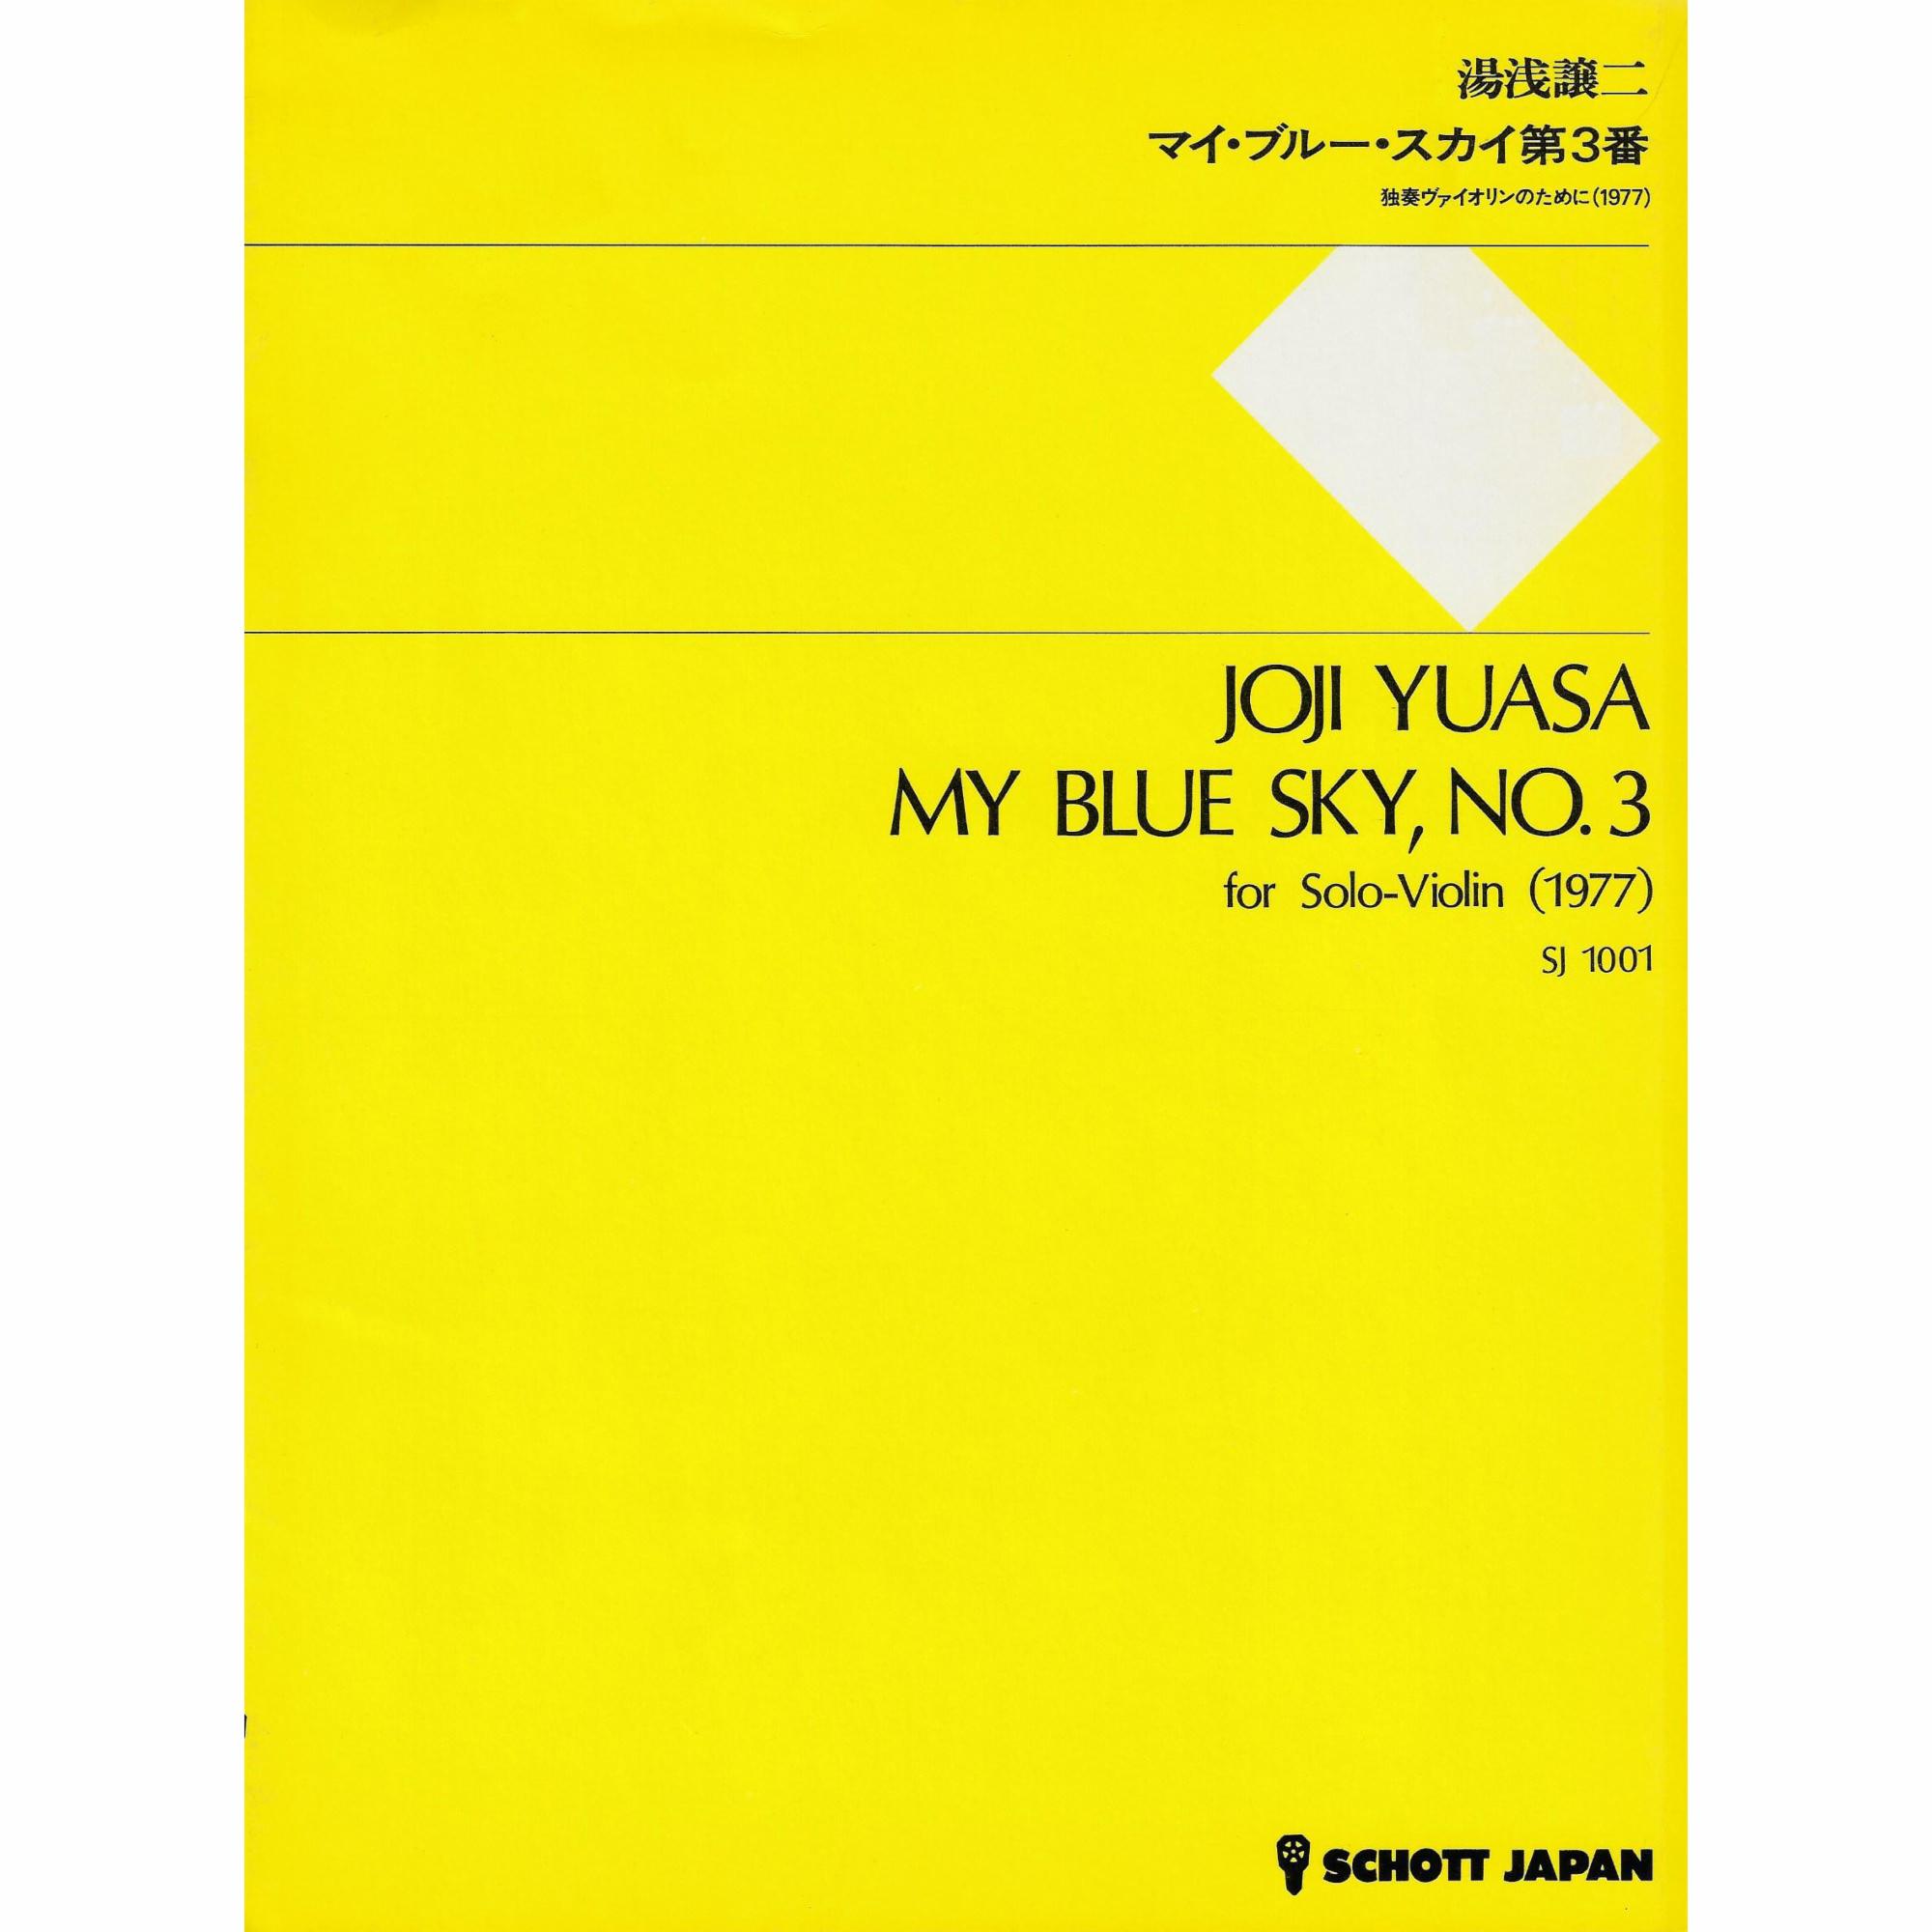 Yuasa -- My Blue Sky, No. 3 for Solo Violin